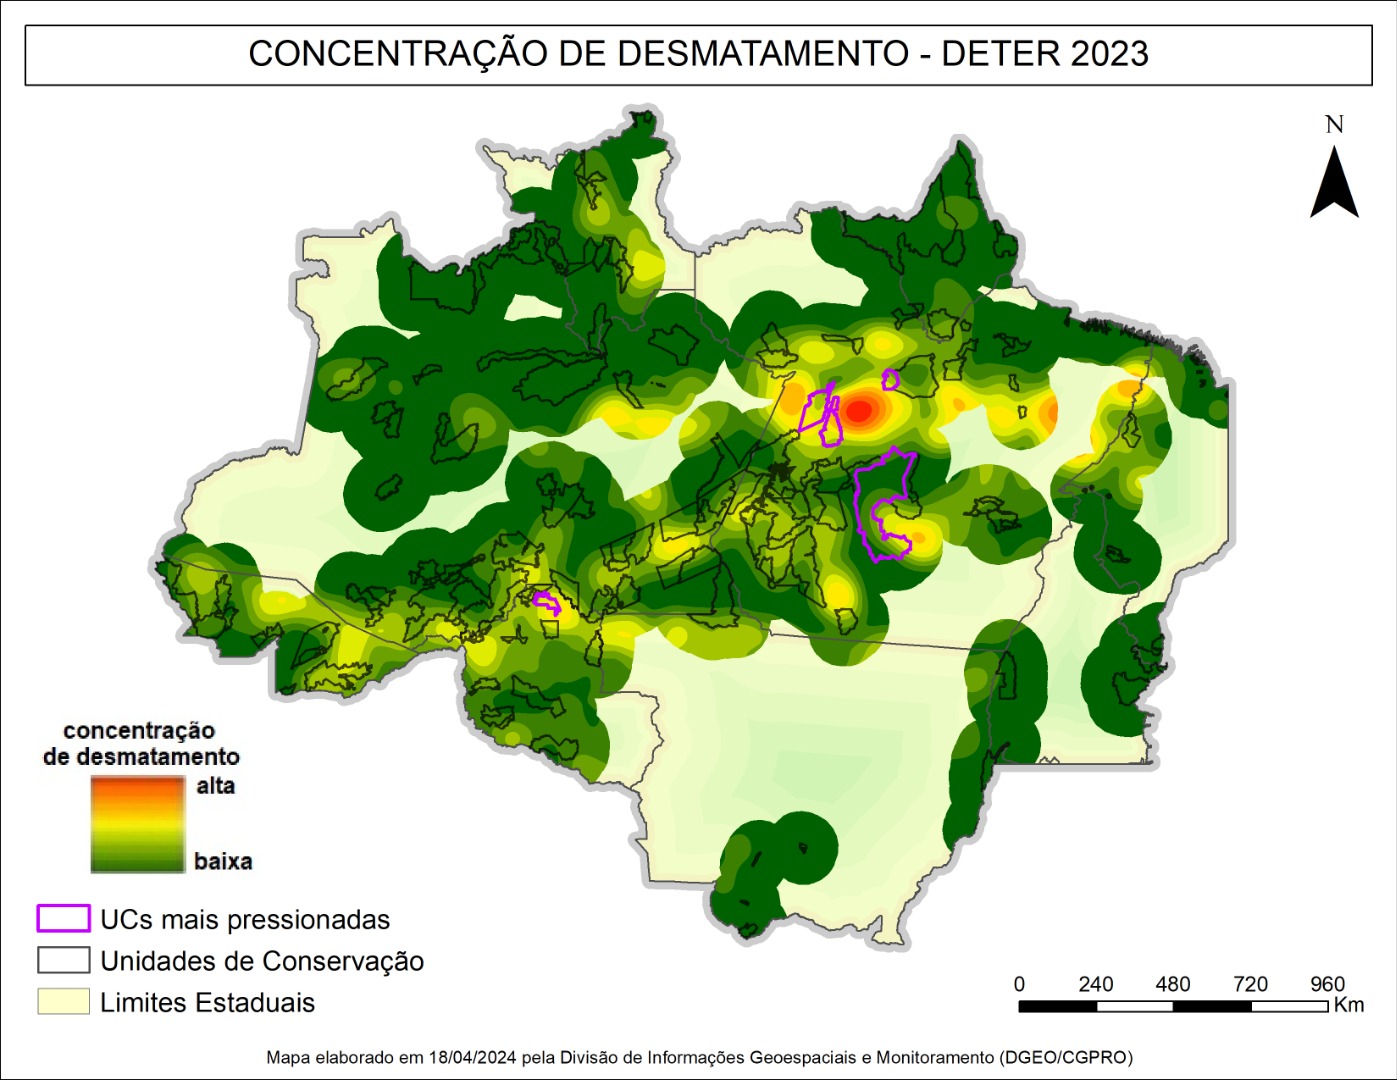 Desmatamento Deter 2023.jfif